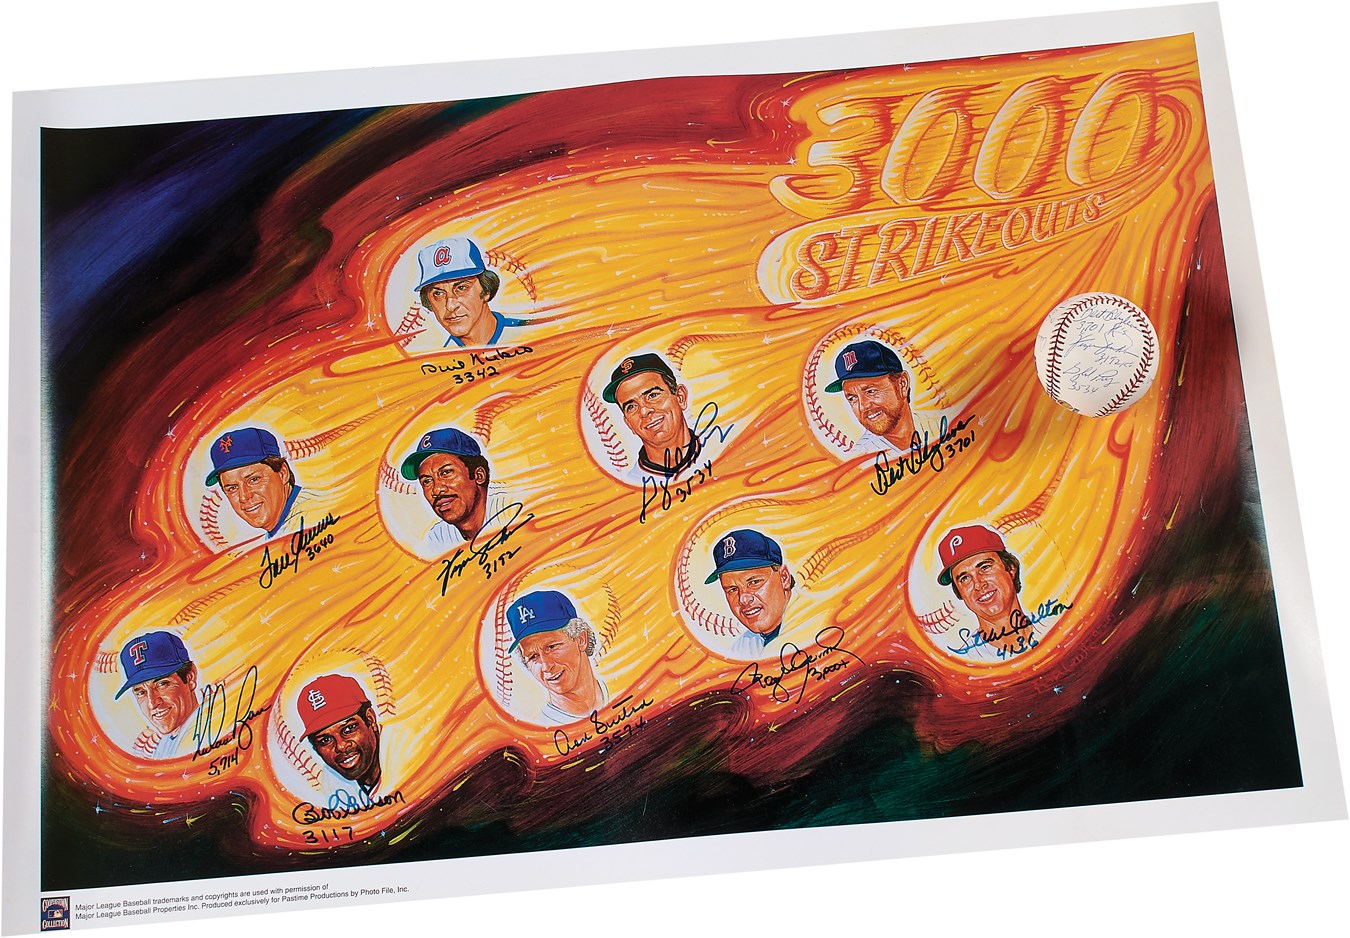 3,000 Strikout Pitchers Signed Print and Baseball